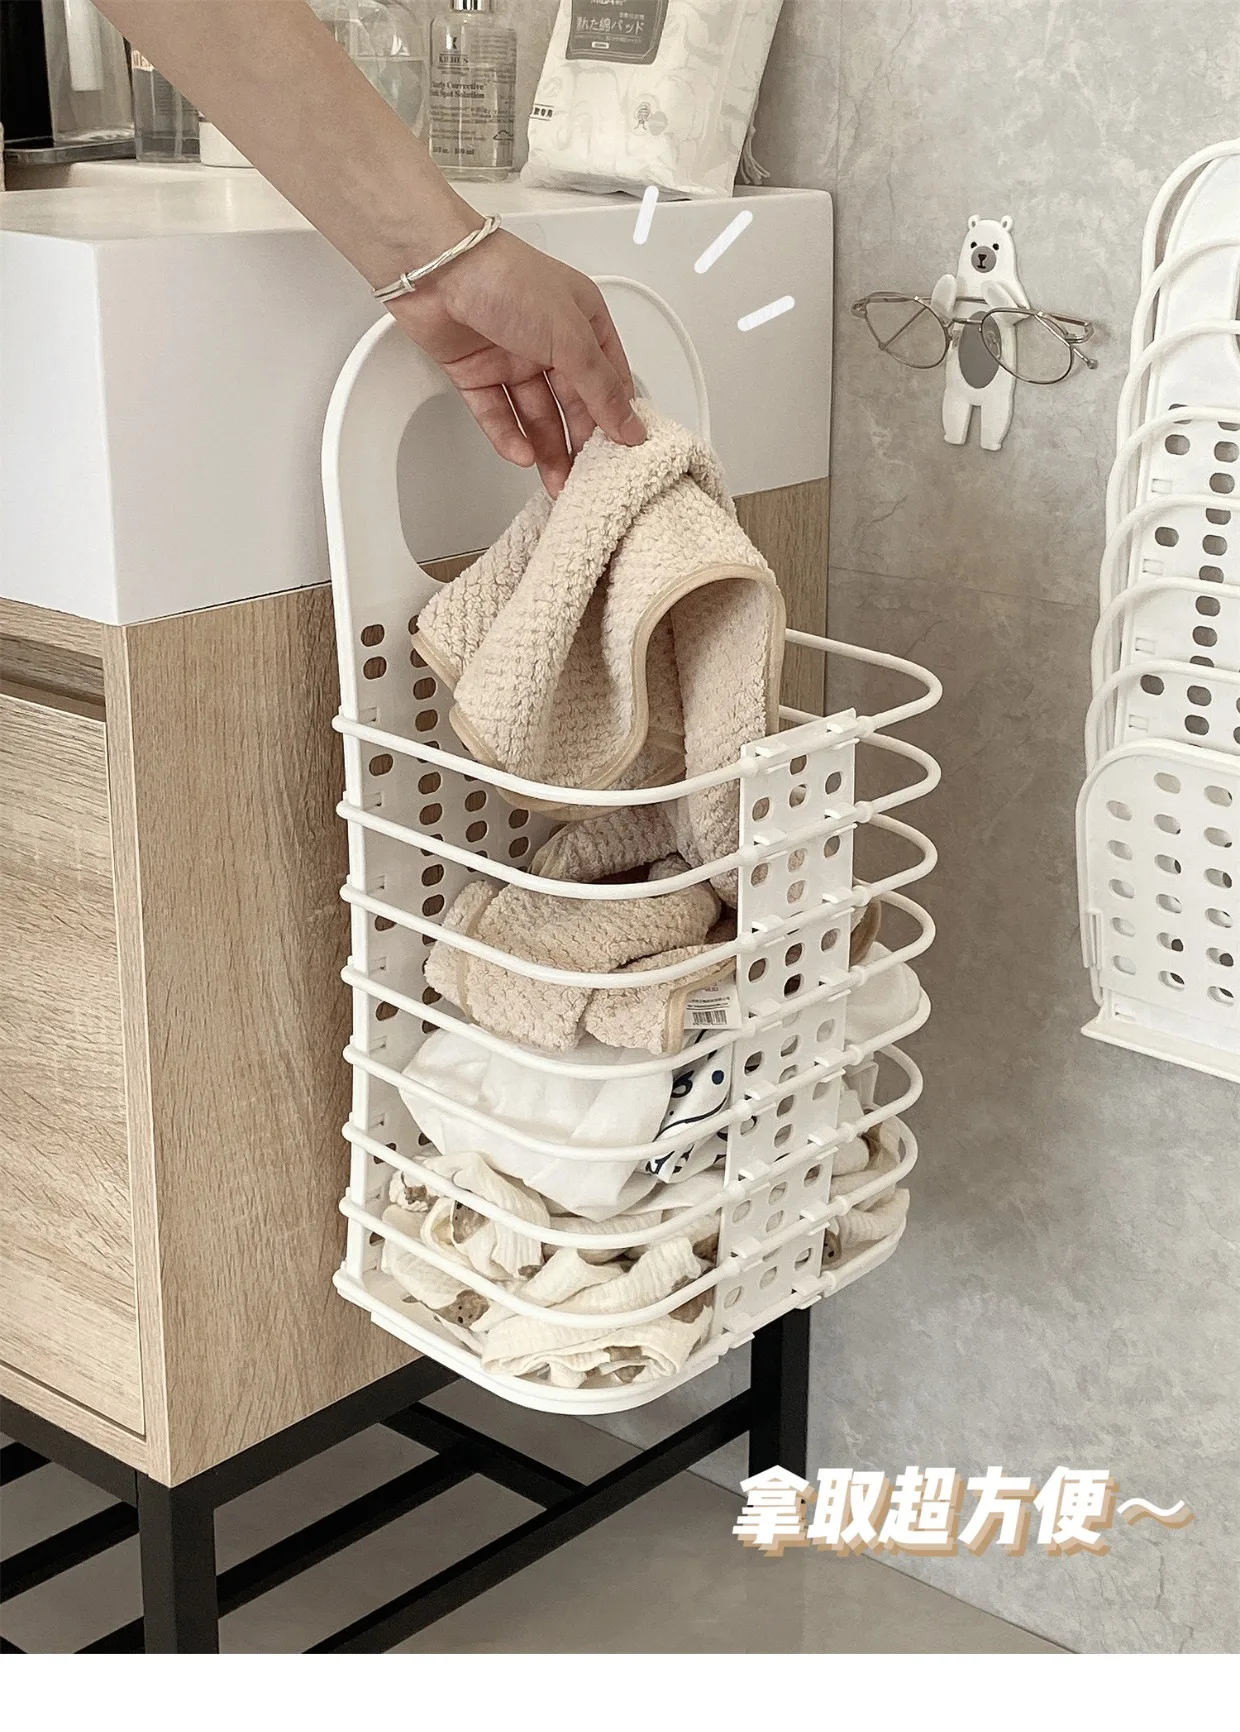 Foldable Hollow Bath Basket Bathroom Shampoo Toiletries Holder Storage  Basket Dirty Clothes Organizer Laundry Basket with Handle - AliExpress